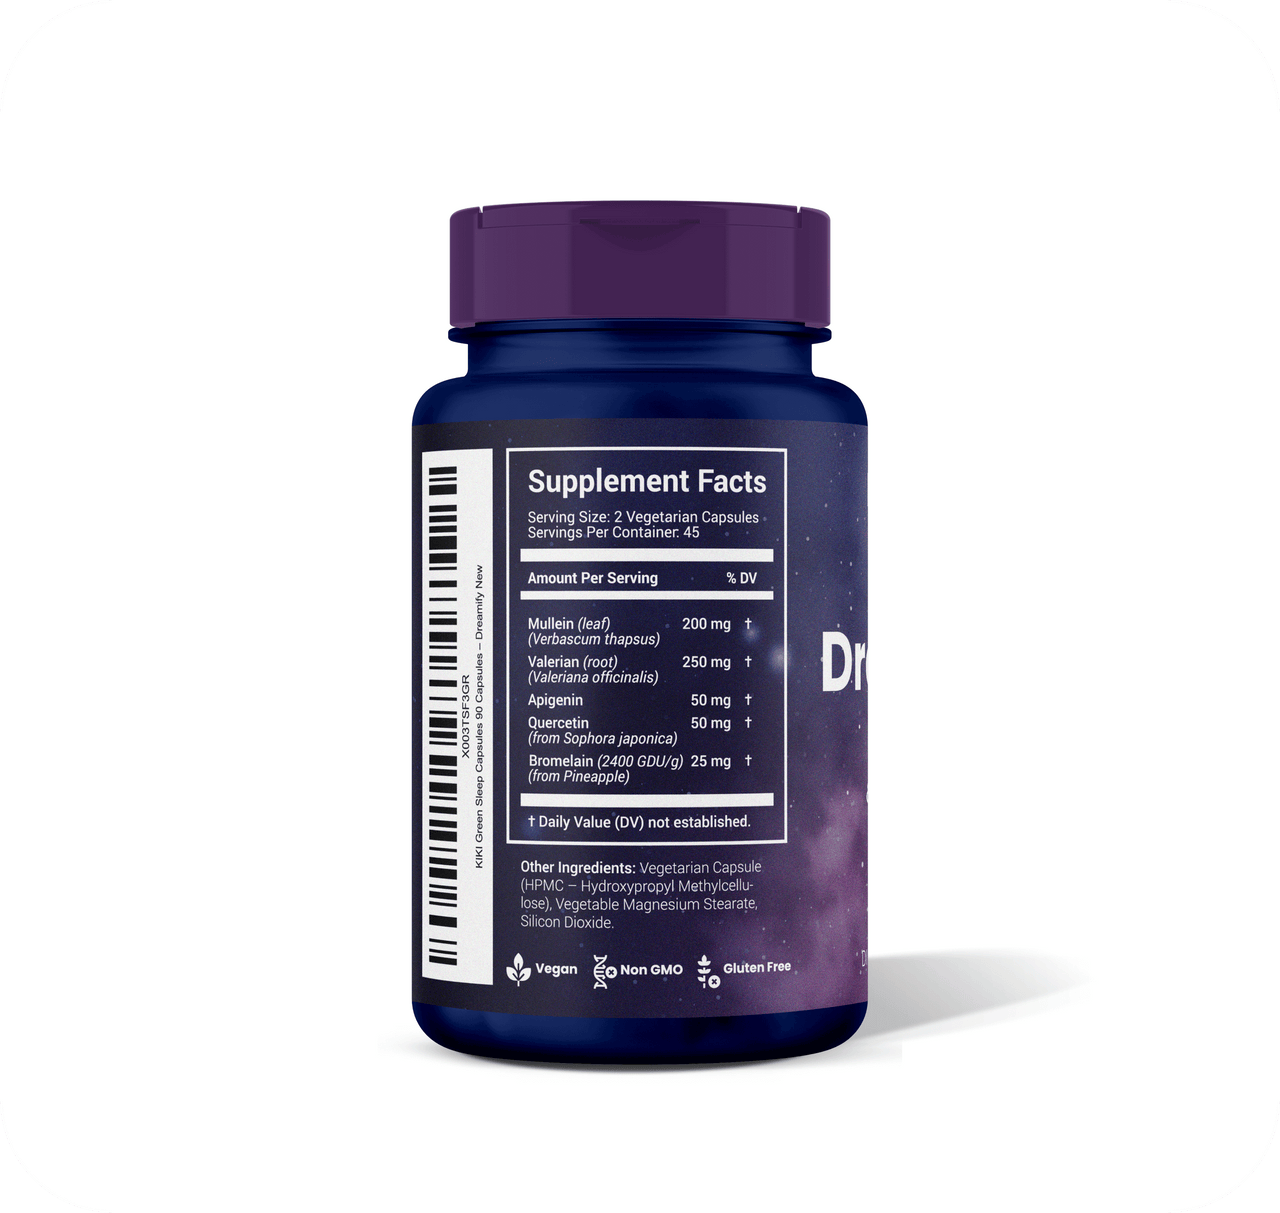 Dreamify - Sleep Supplement with Apigenin, Valerian Root & Mullein Leaf